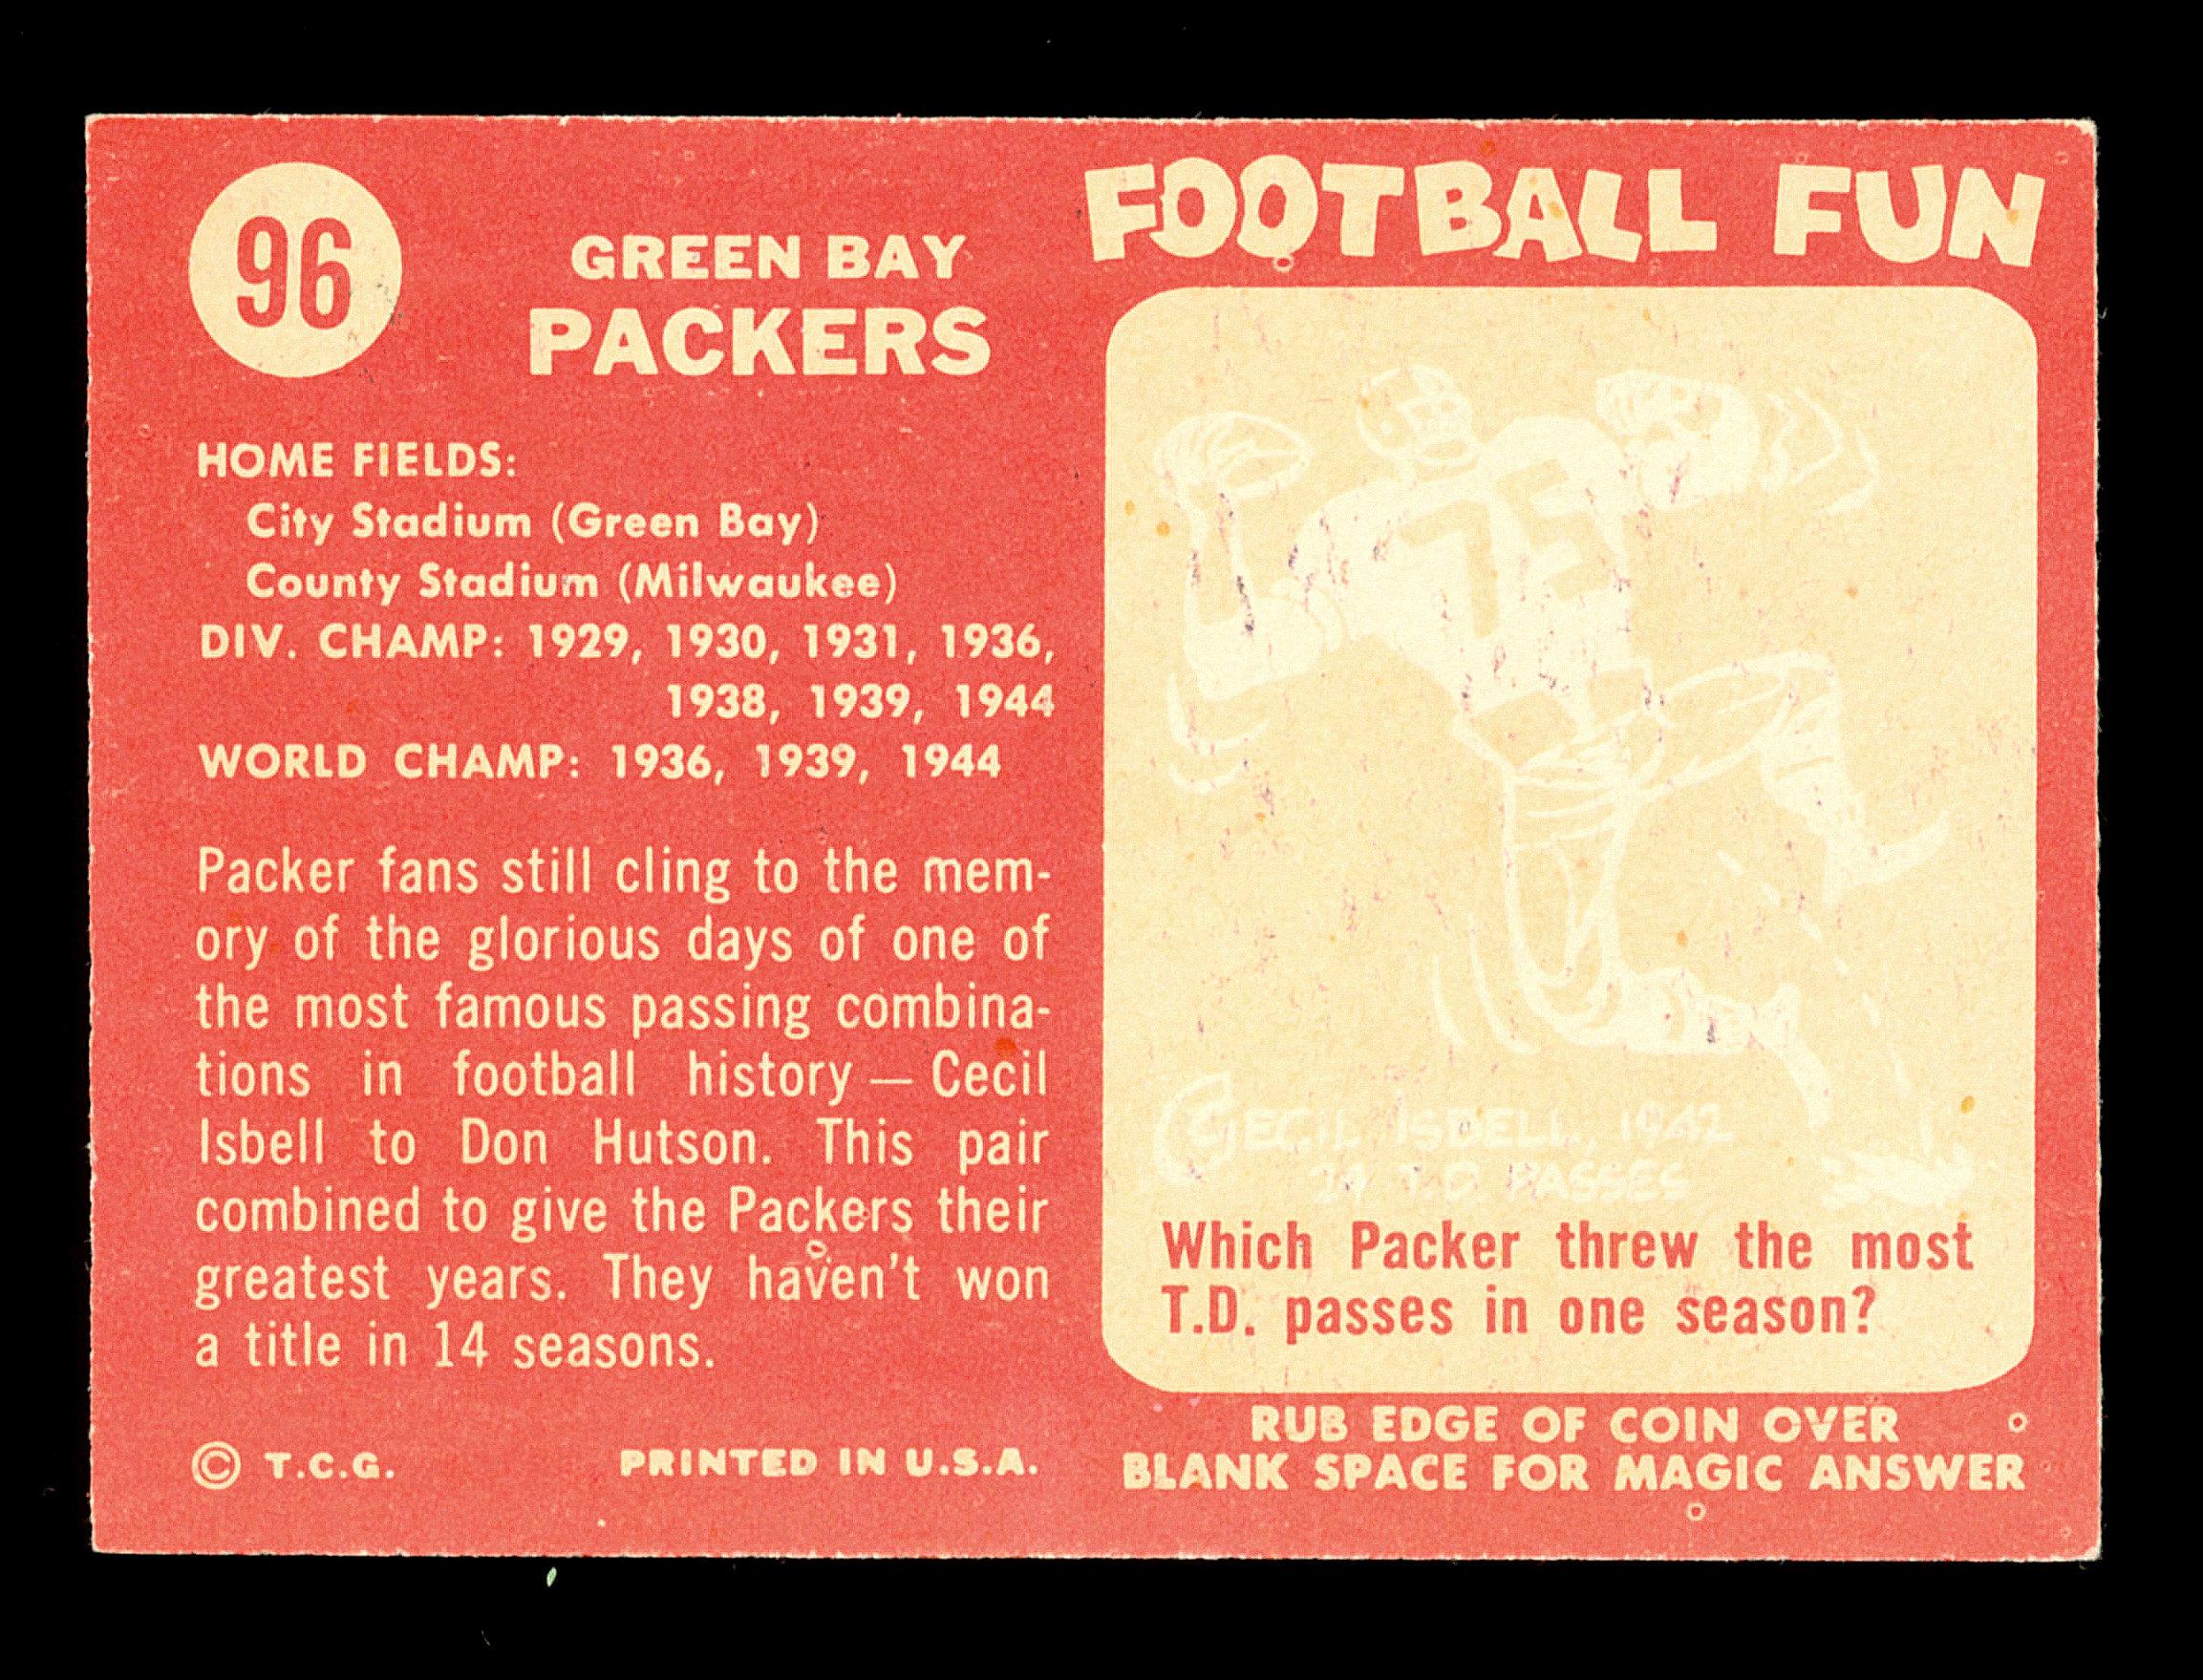 1958 Topps Football Card #96 Green Bay Packers Team Card